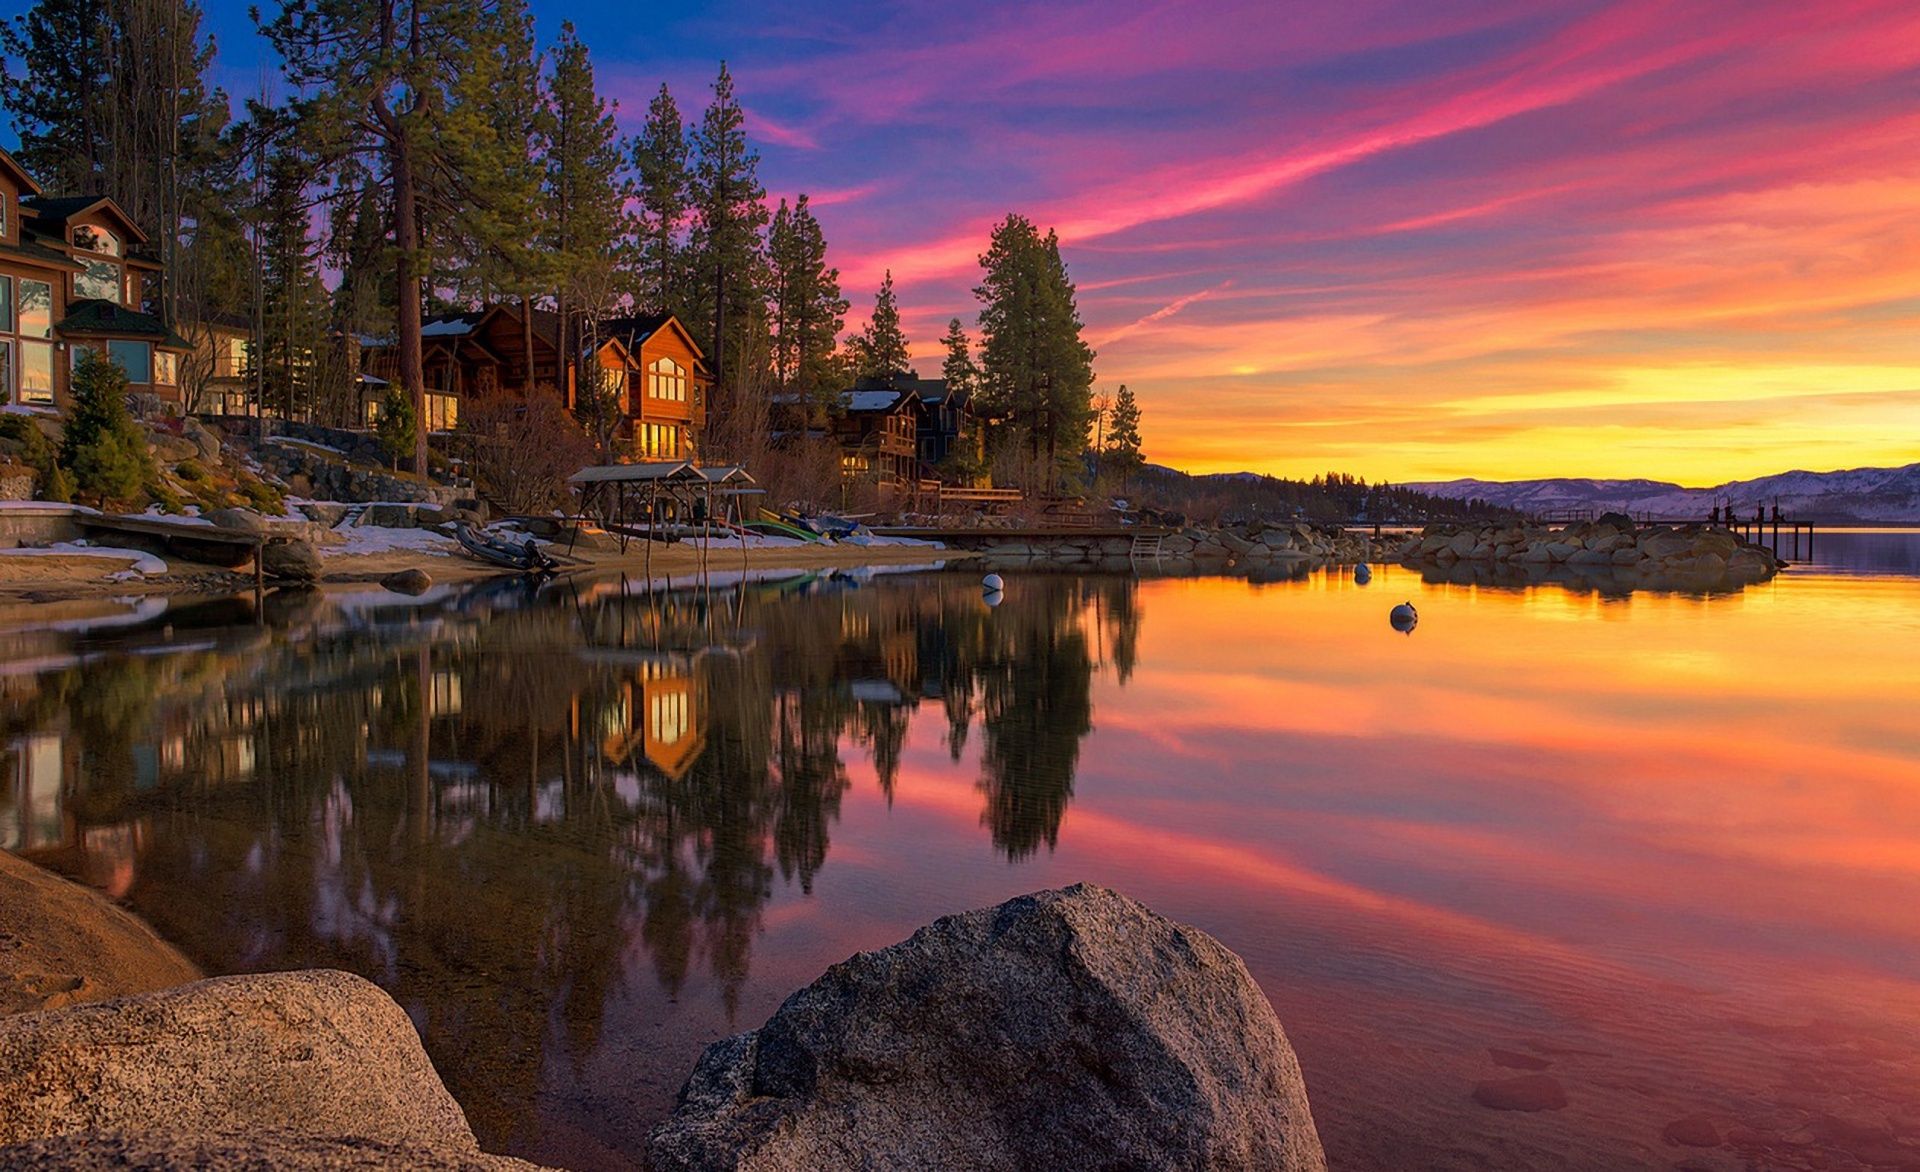 Free download lake house rocks sunset sky clouds Lake Tahoe United